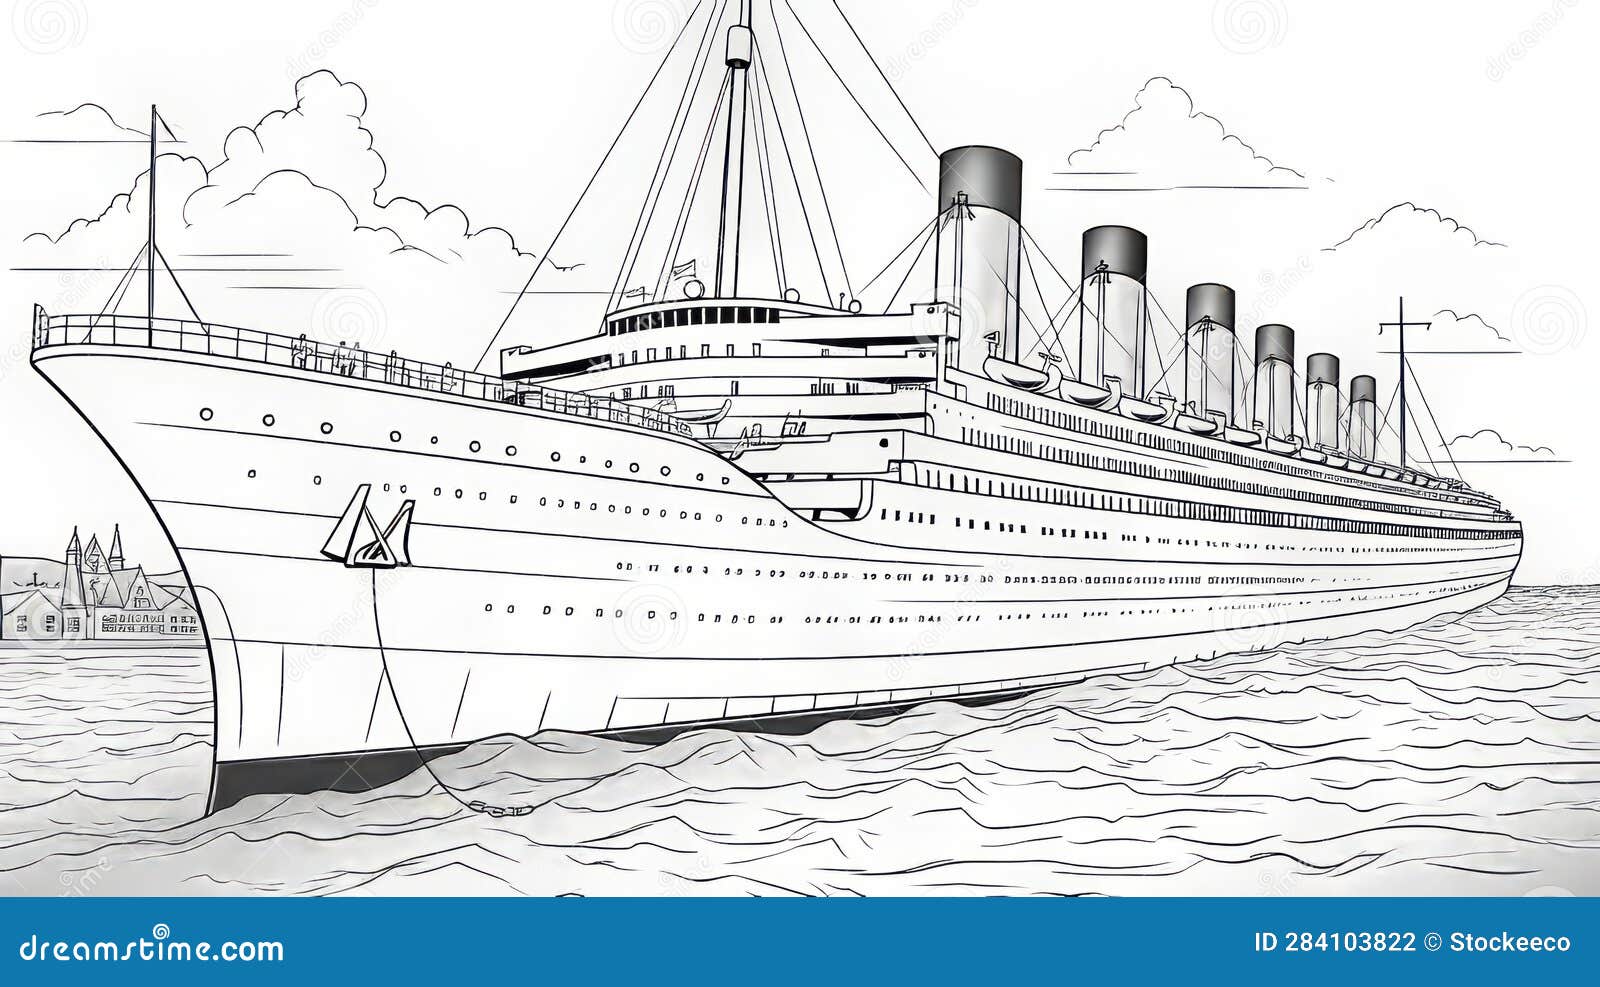 Titanic 1912  Oceanliner Designs  Illustration